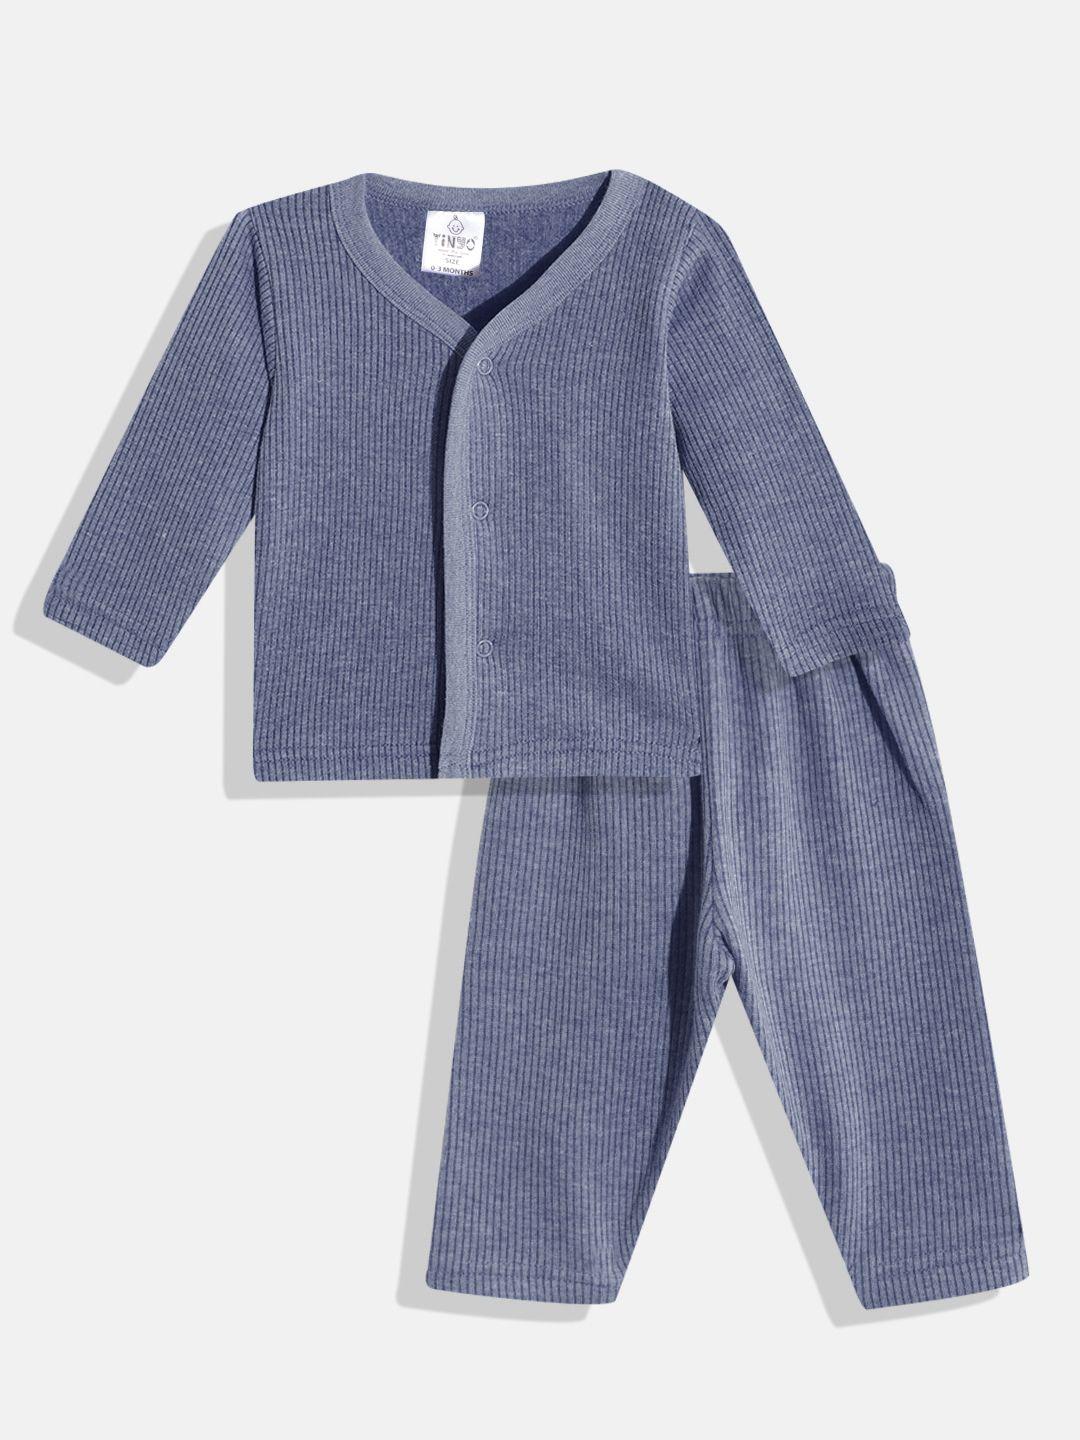 tinyo infant blue self striped melange effect cotton thermal set